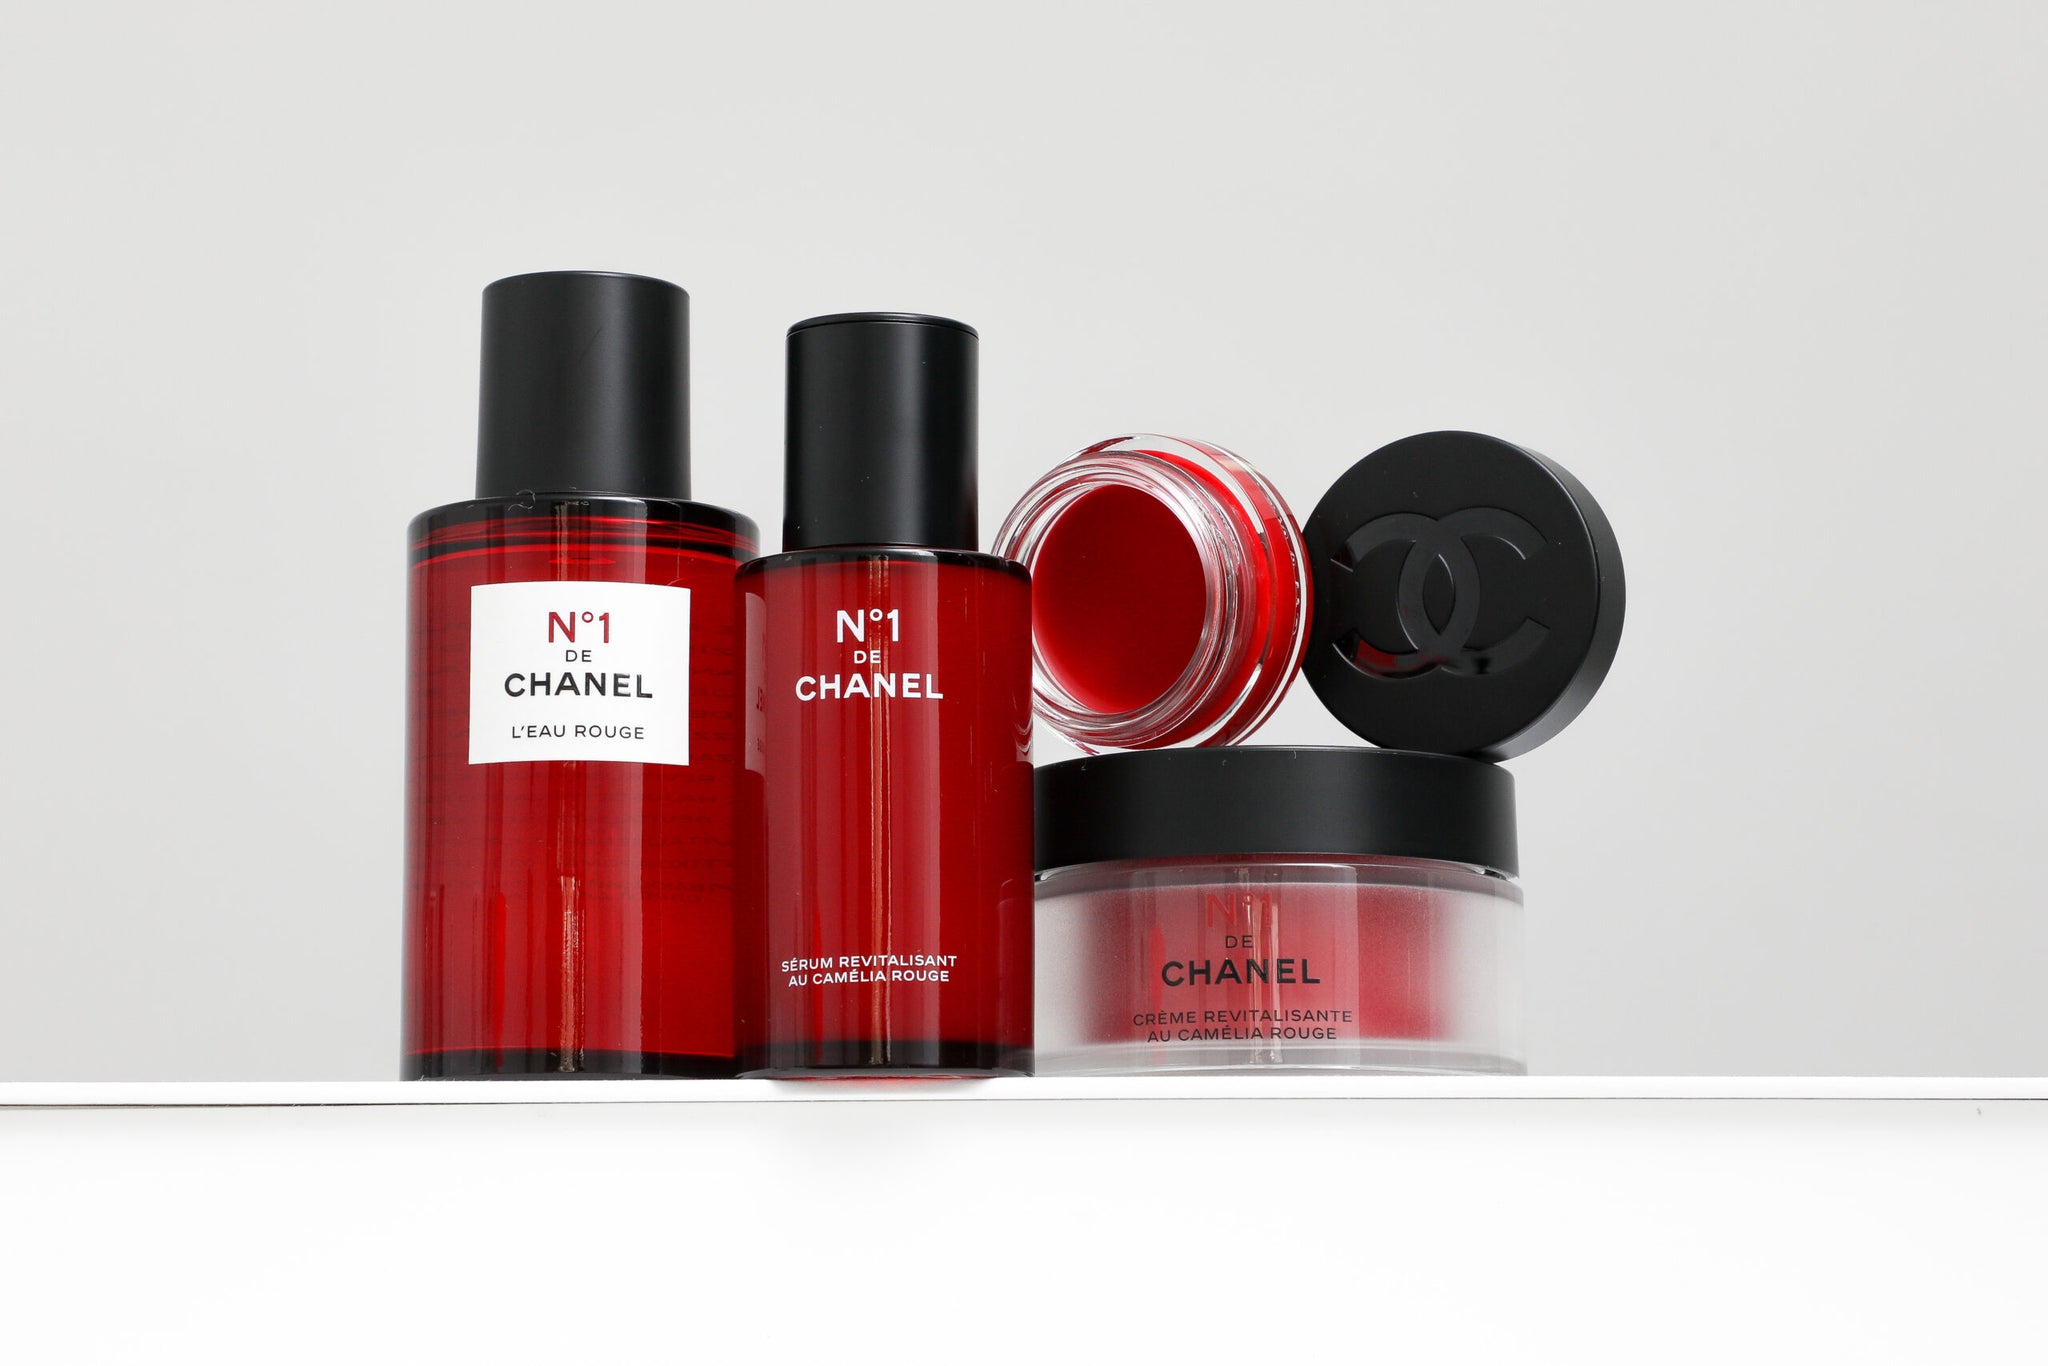 Chanel N°1 De Chanel L'eau Rouge Revitalising Fragrance Mist